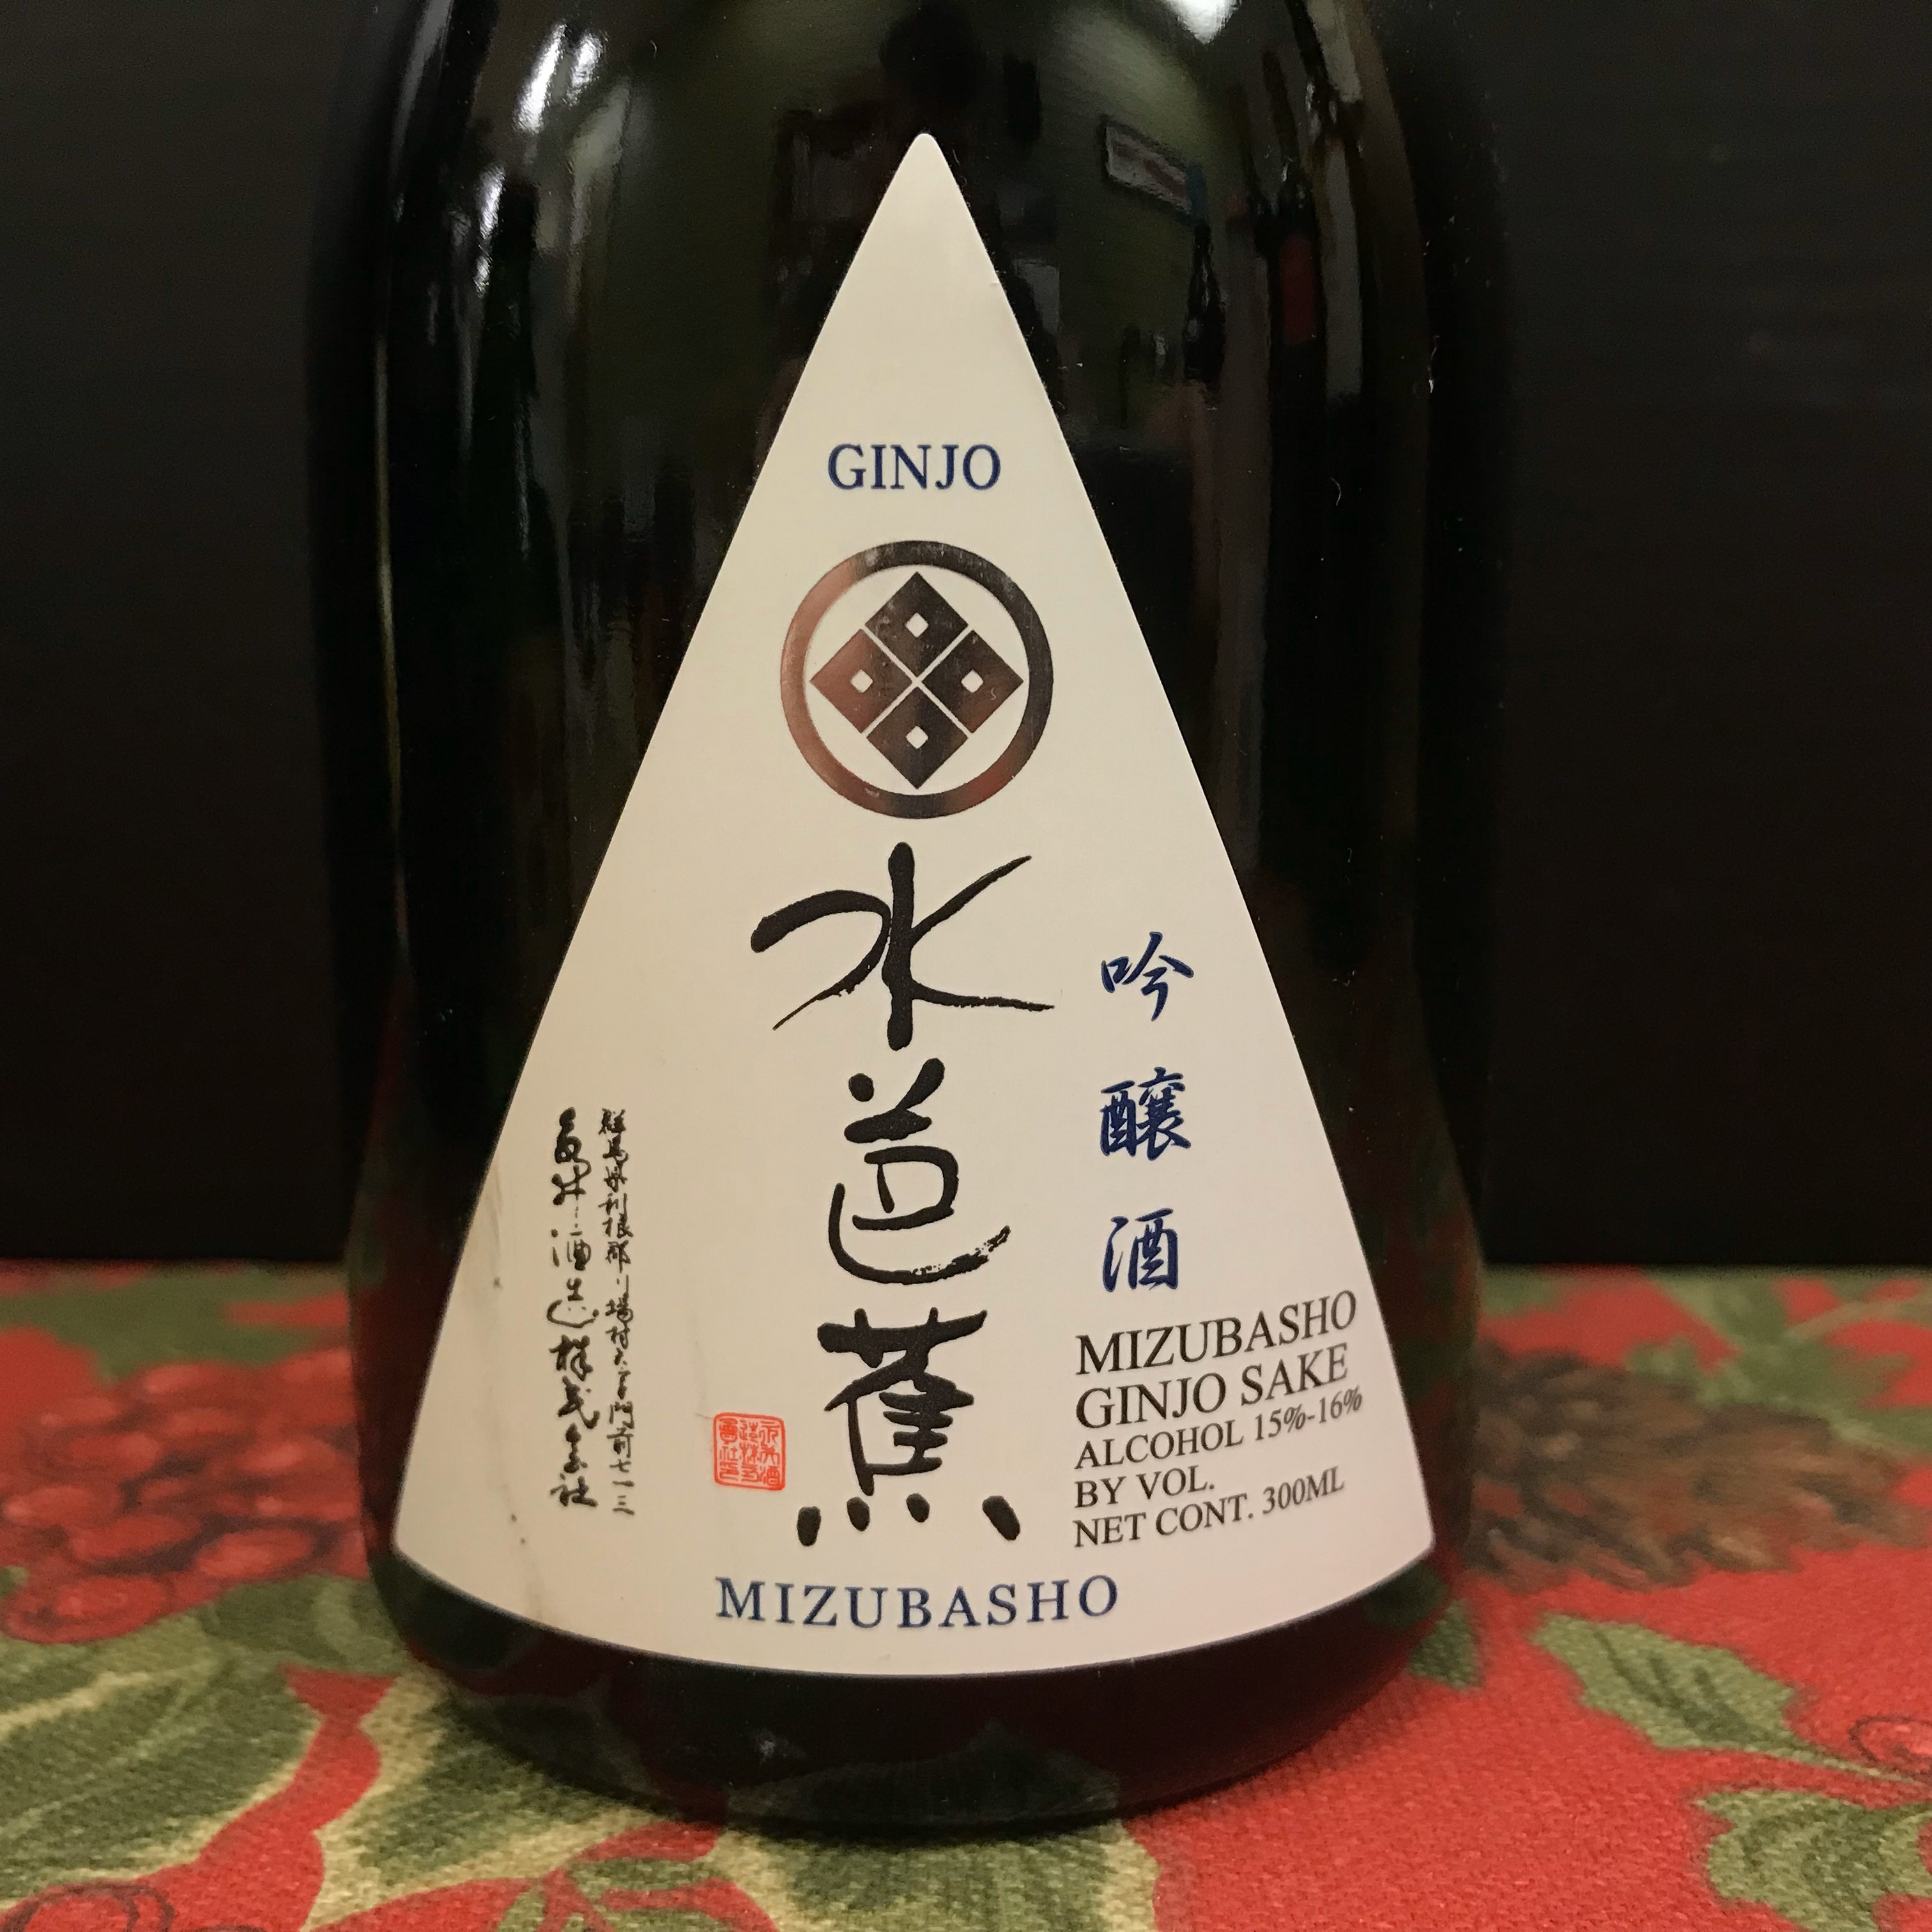 Mizubasho Ginjo Sake 300 ml